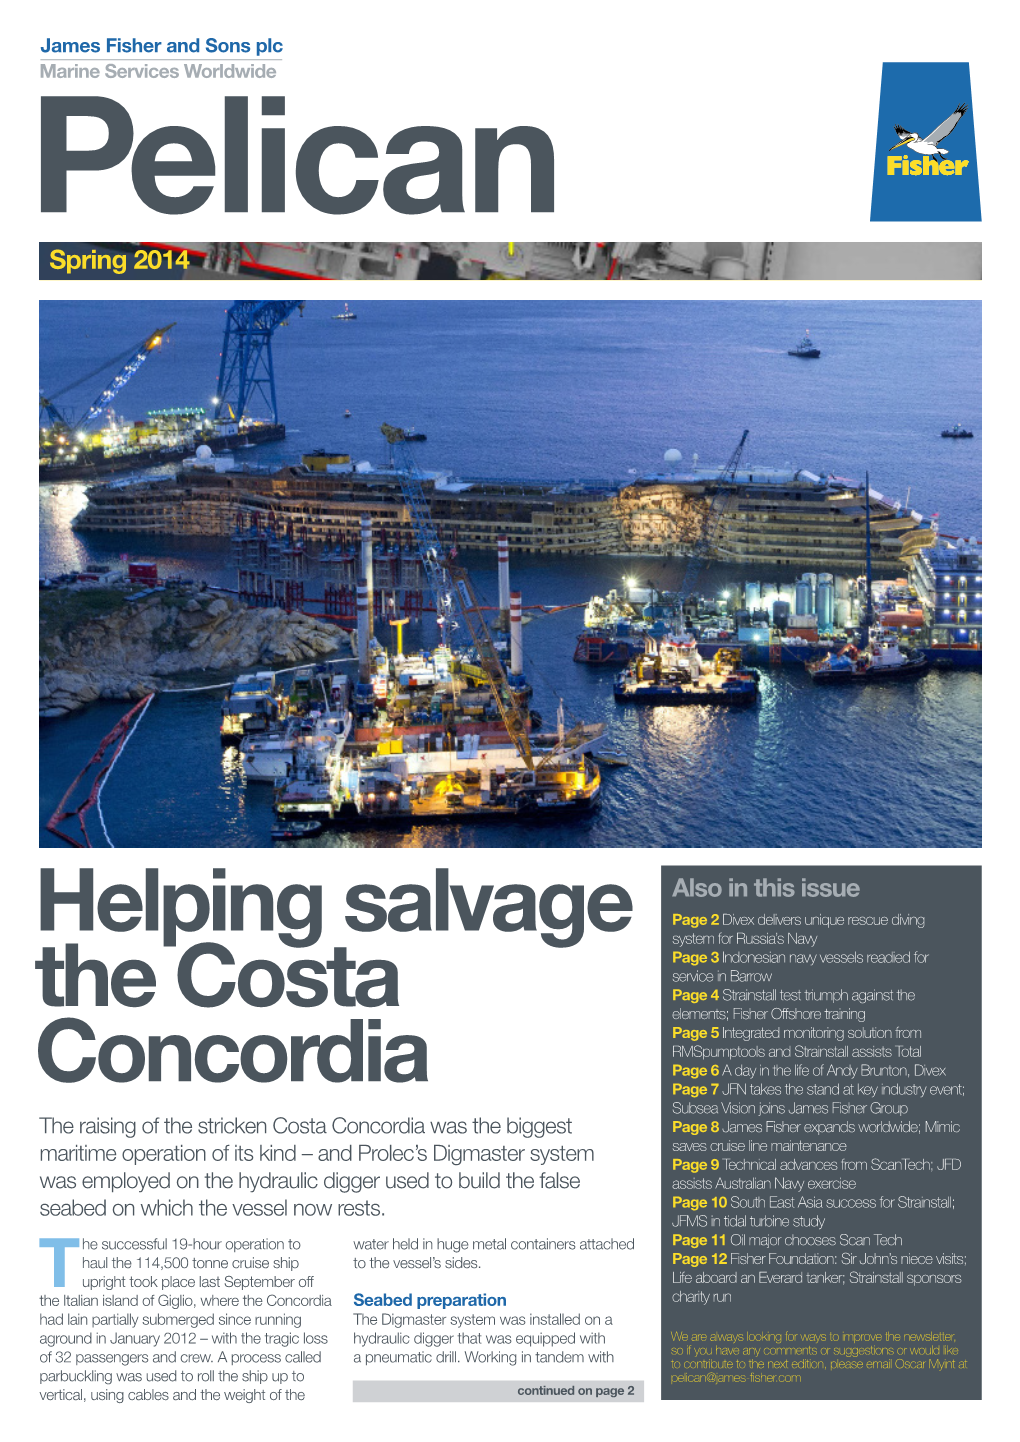 Helping Salvage the Costa Concordia